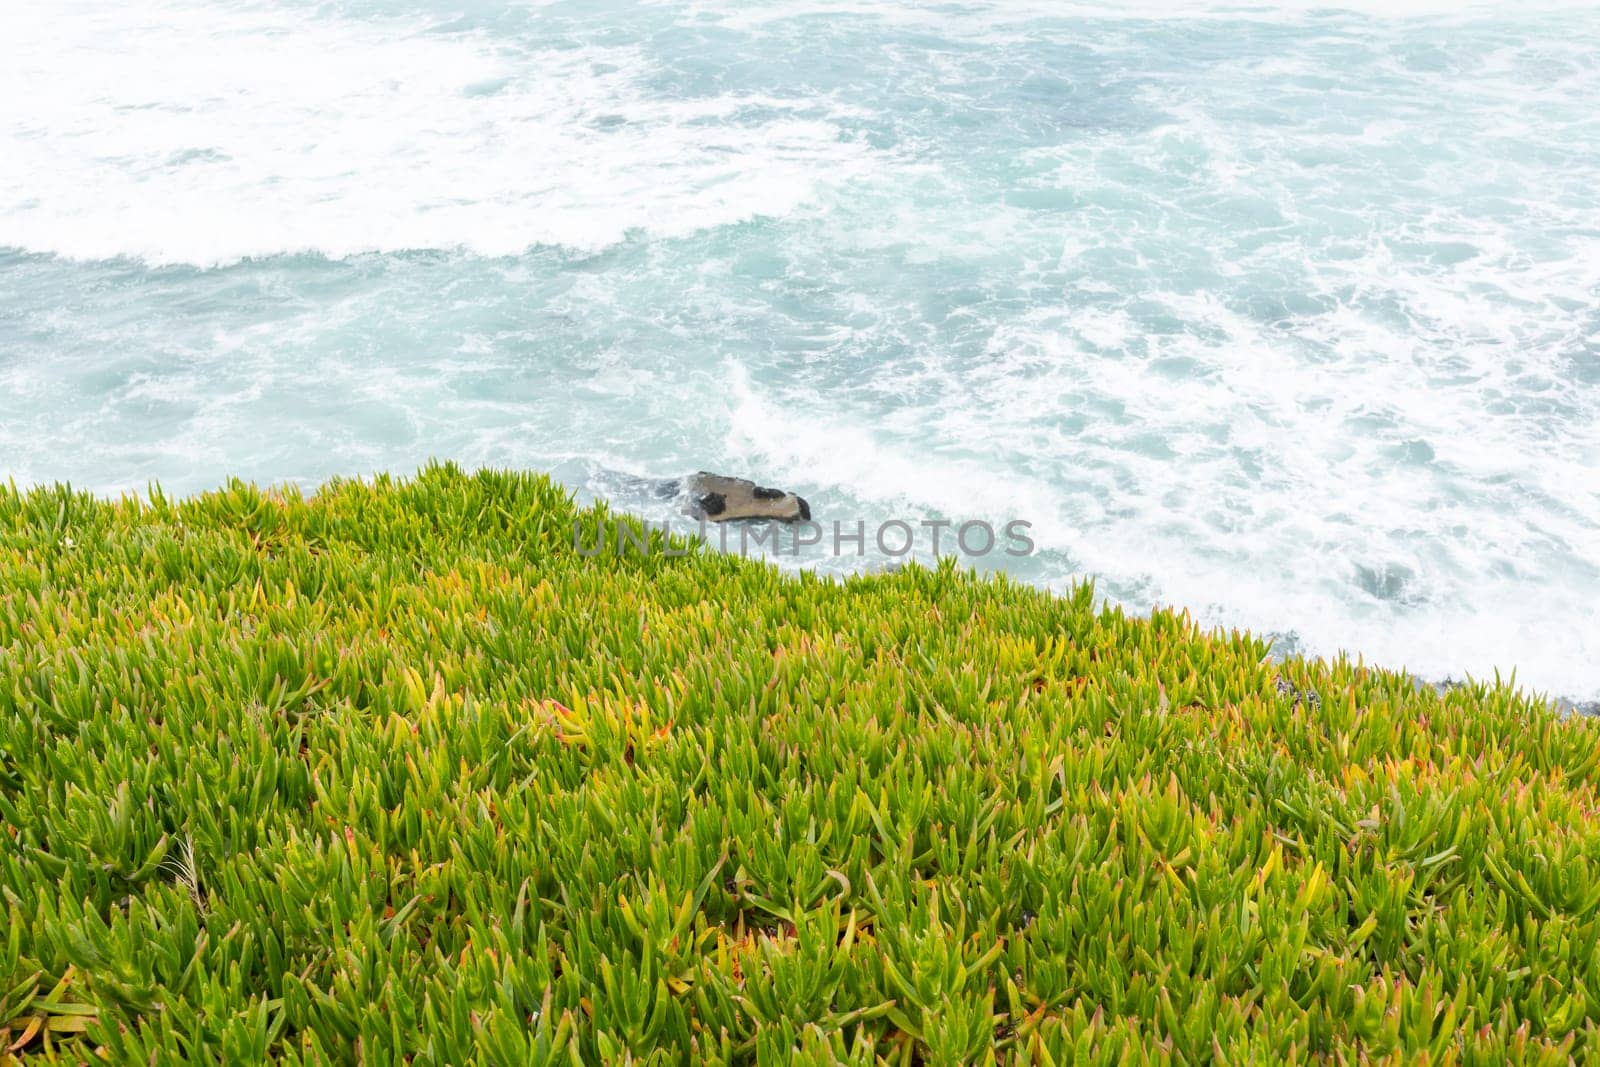 Coronado Beach. Sea or Ocean Waves along Green Grass, Plant on Pacific coast line in San Diego, USA, California. Wallpaper, Scenic Backdrop. Horizontal Plane. by netatsi